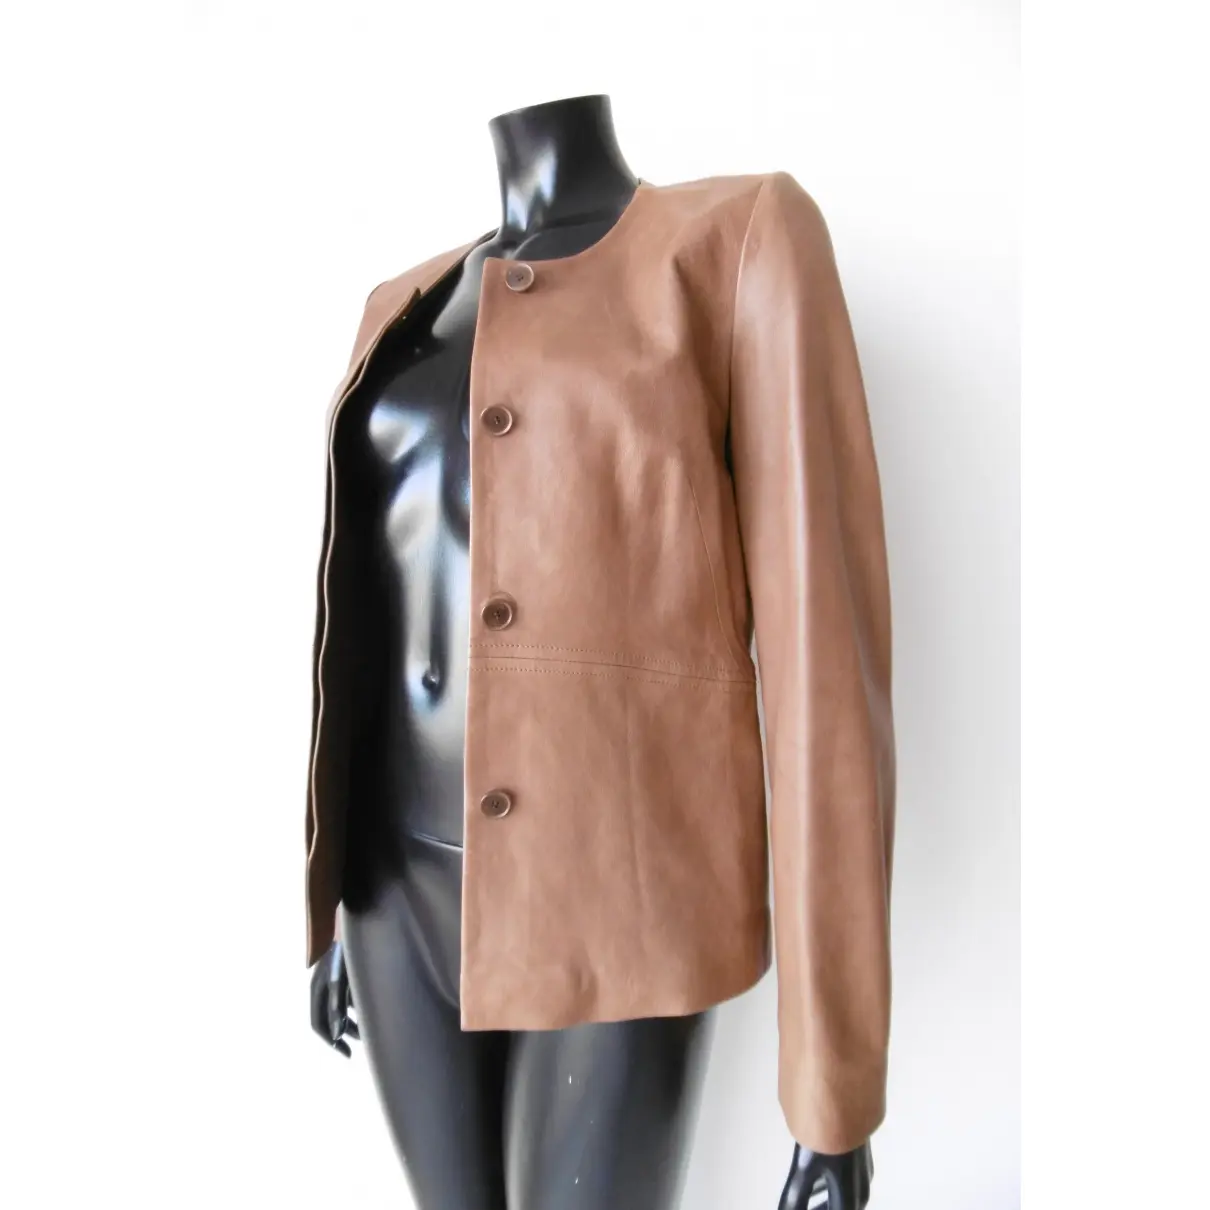 Leather jacket Gerard Darel